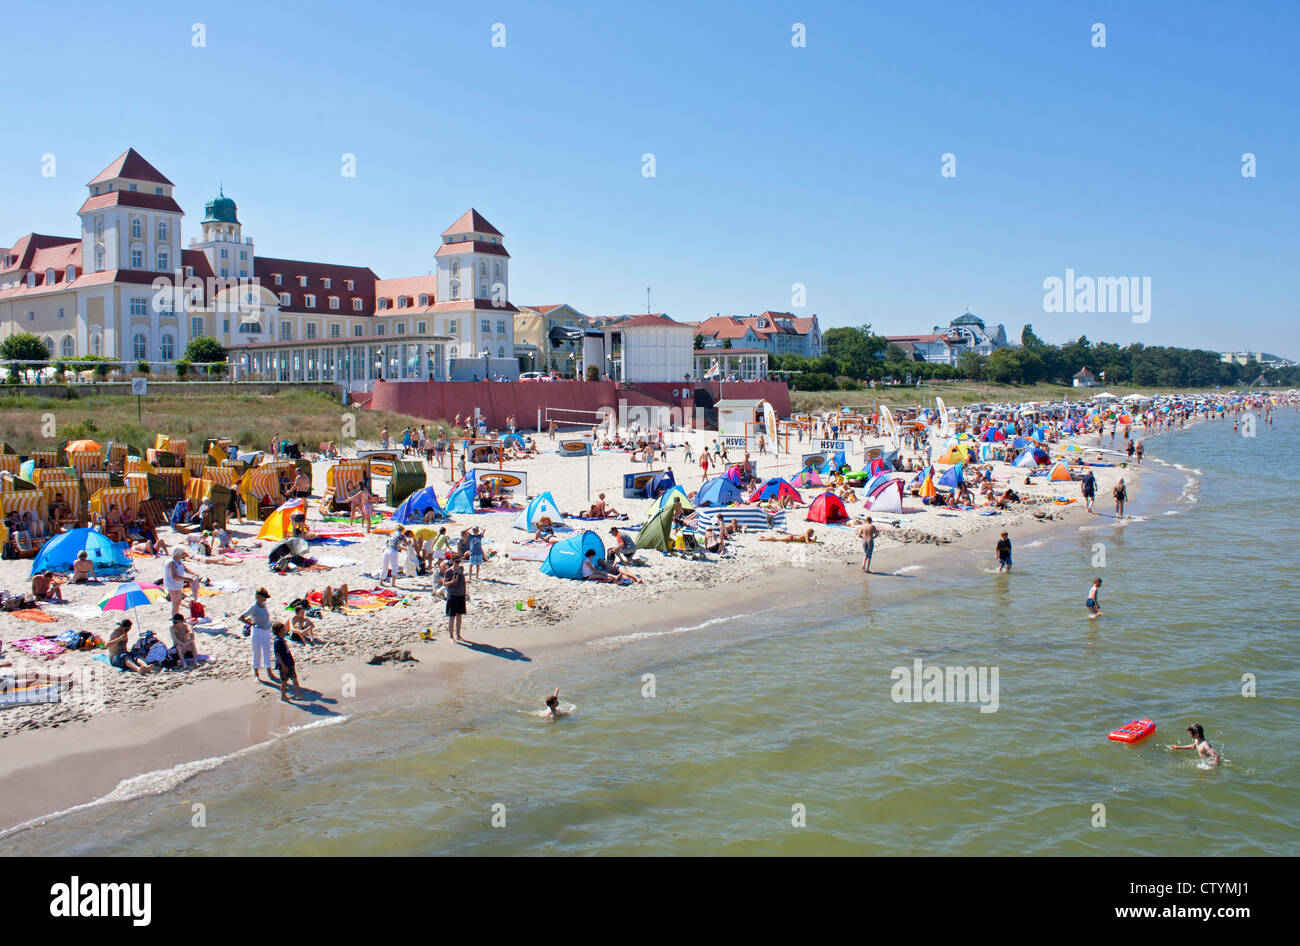 spa hotel and beach, Binz, Ruegen Island, Baltic Sea Coast, Mecklenburg-West Pomerania, Germany Stock Photo